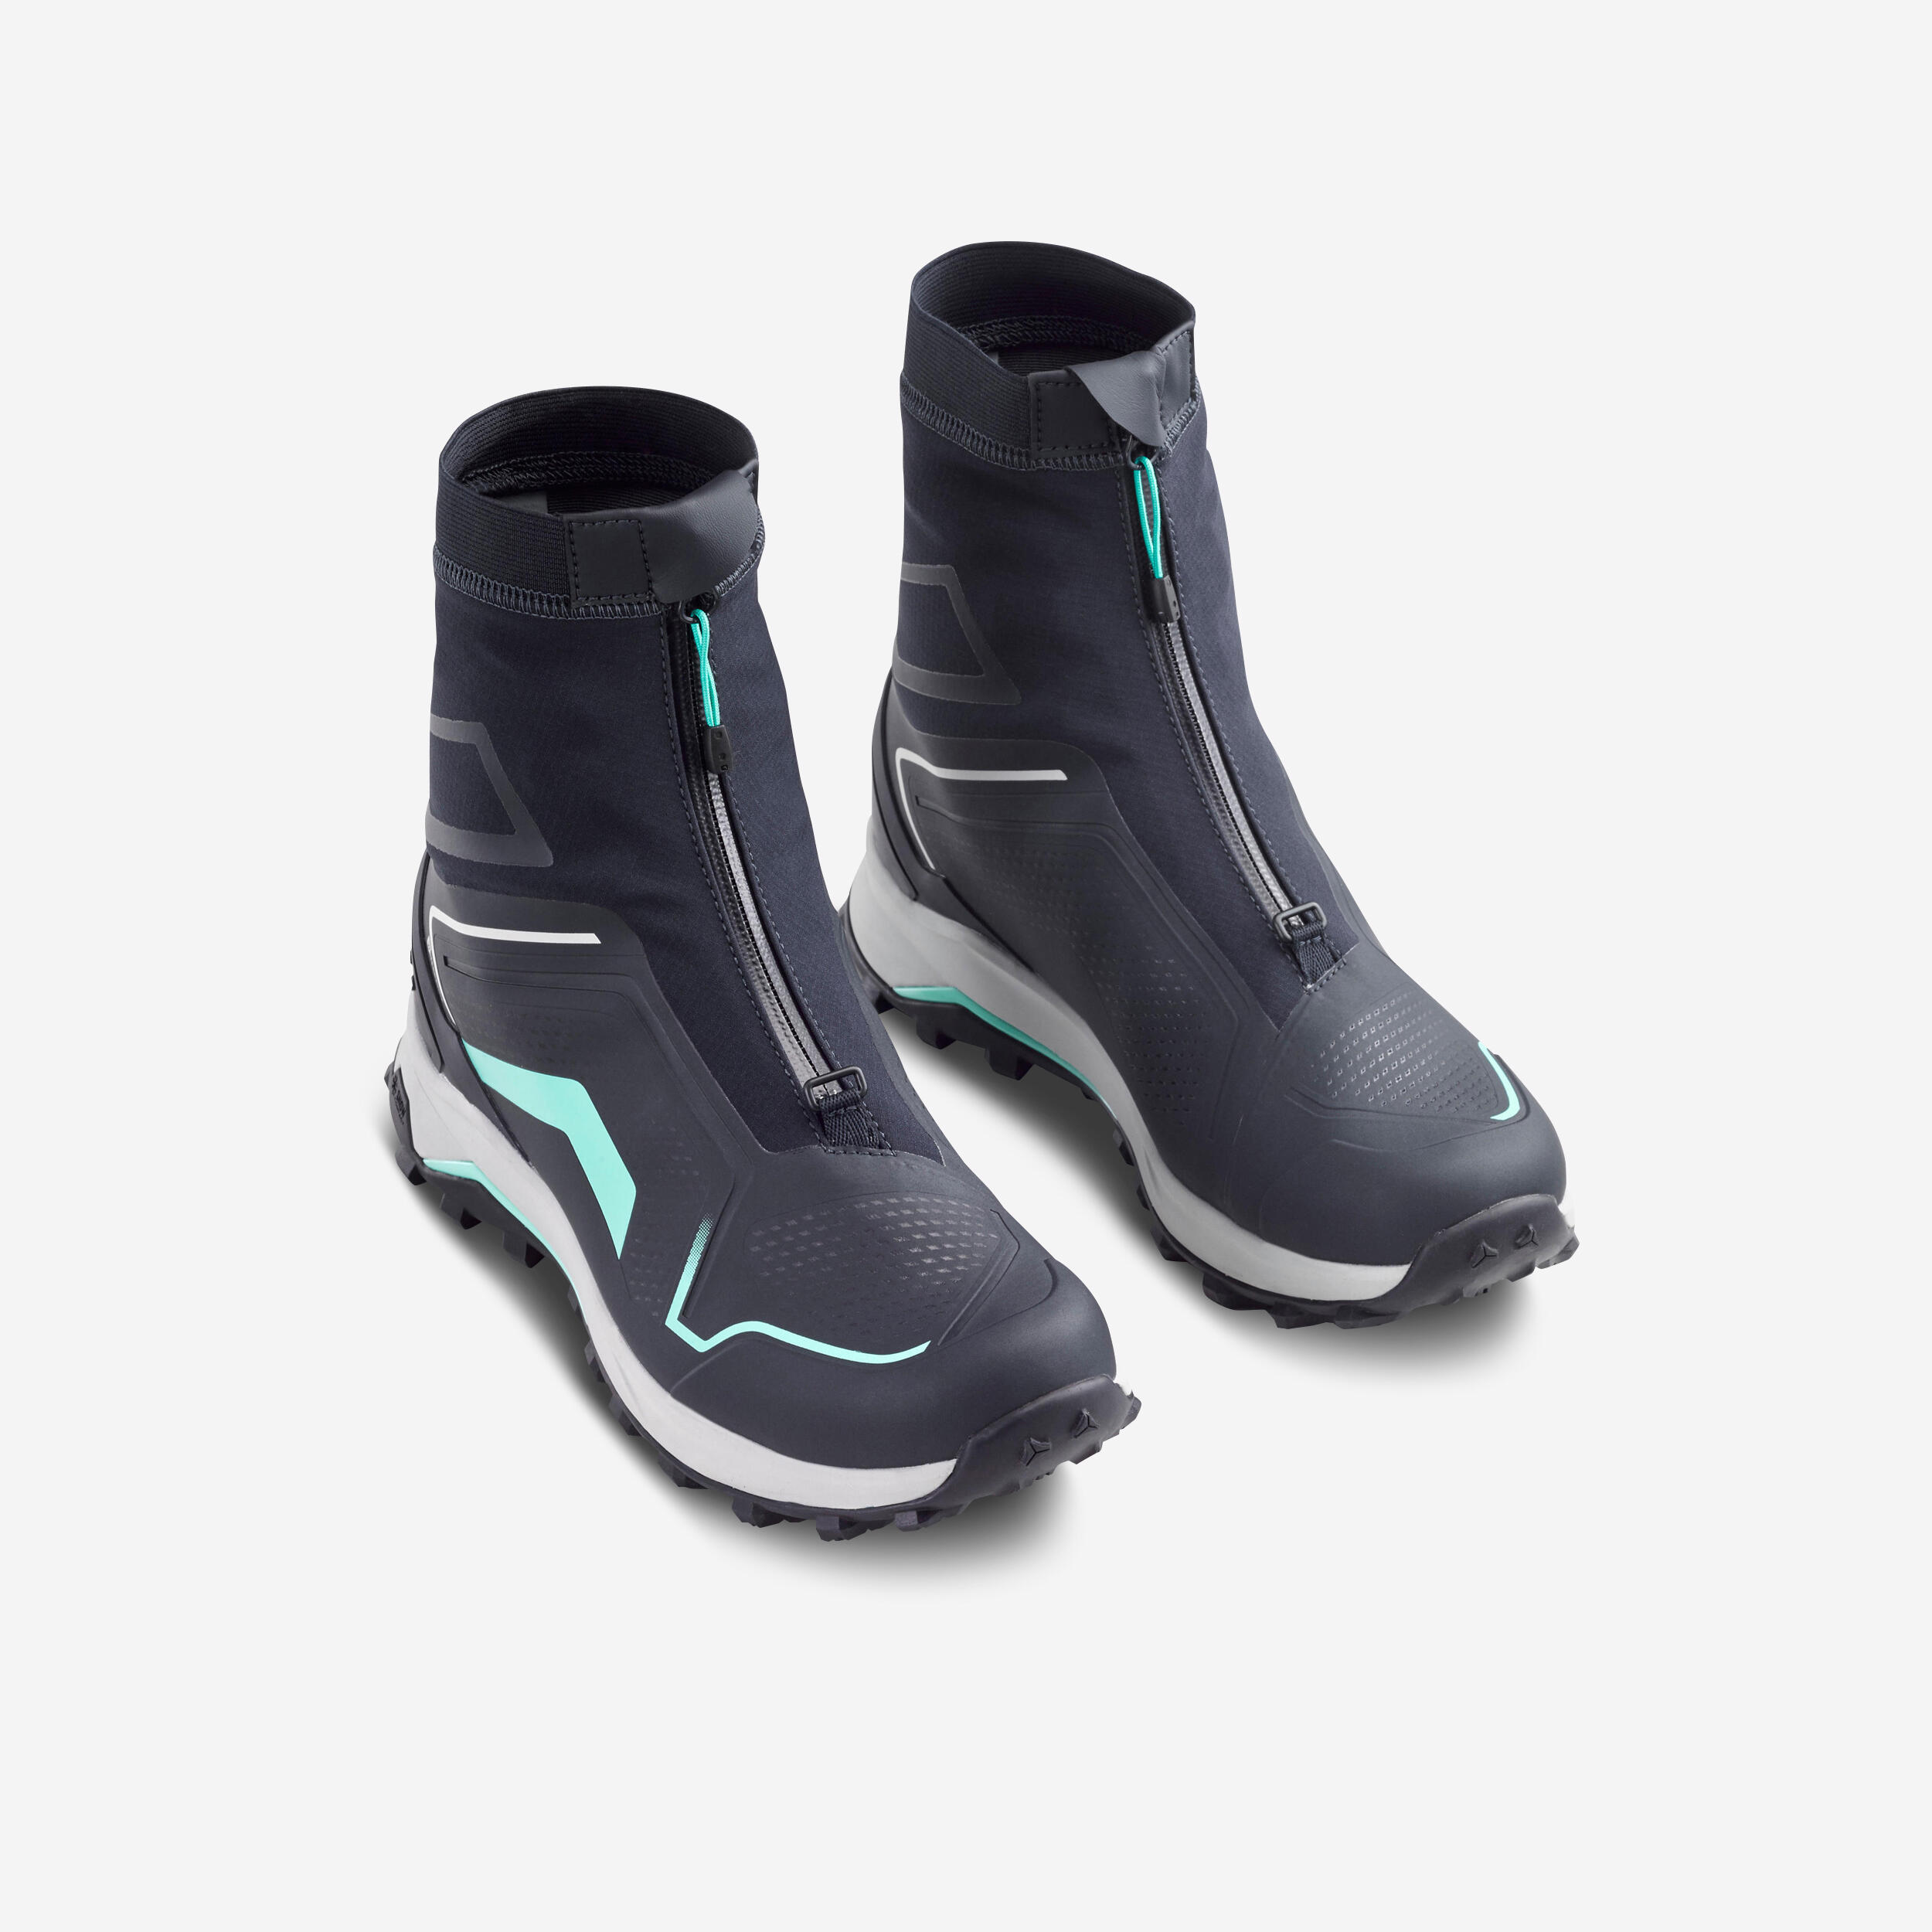 Women's warm and waterproof hiking boots - SH900 PRO MOUNTAIN   1/6